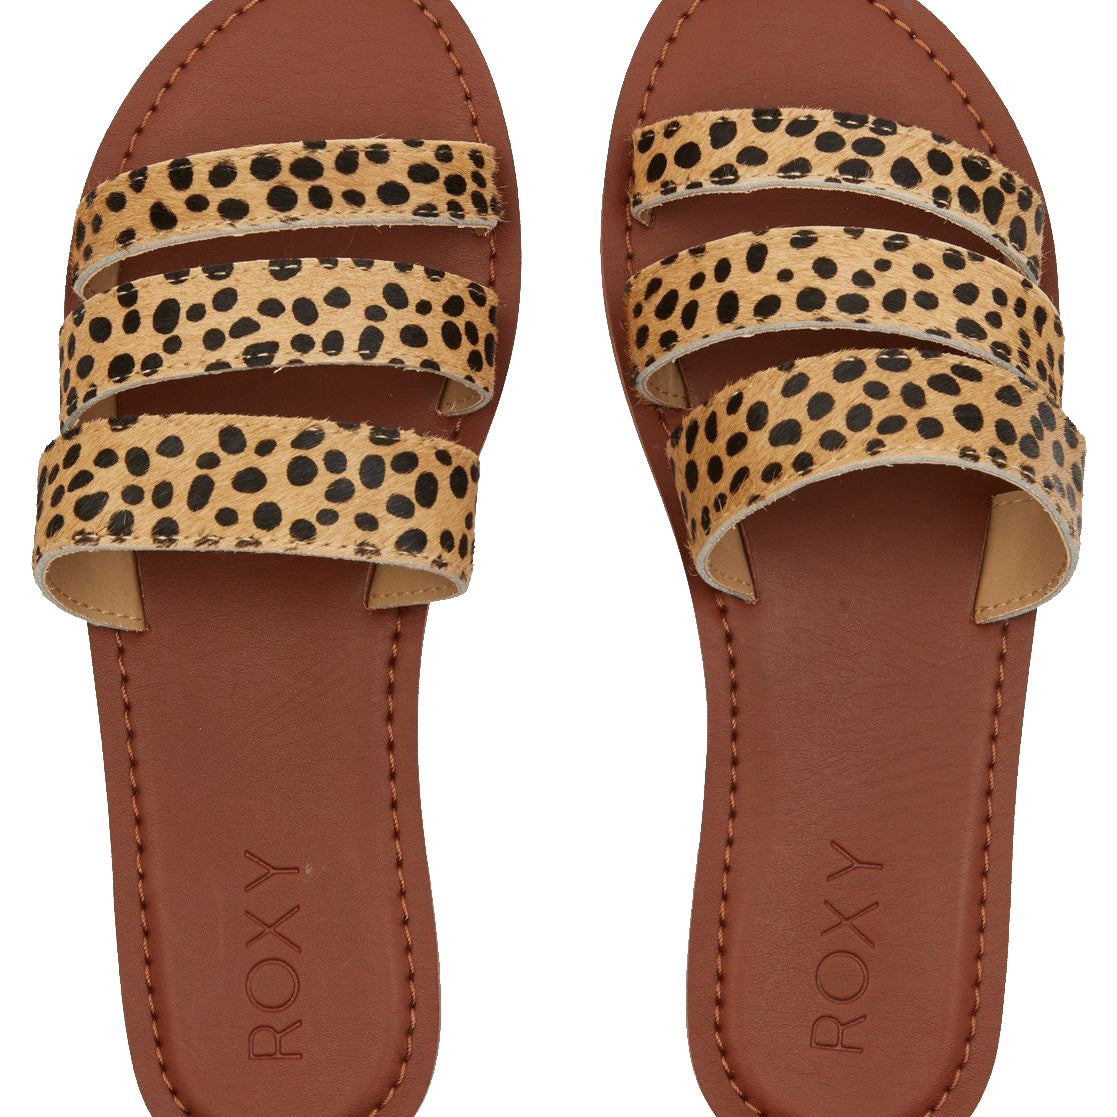 Roxy Wyld Rose 2 Womens Sandal CHE-Cheetah Print 6